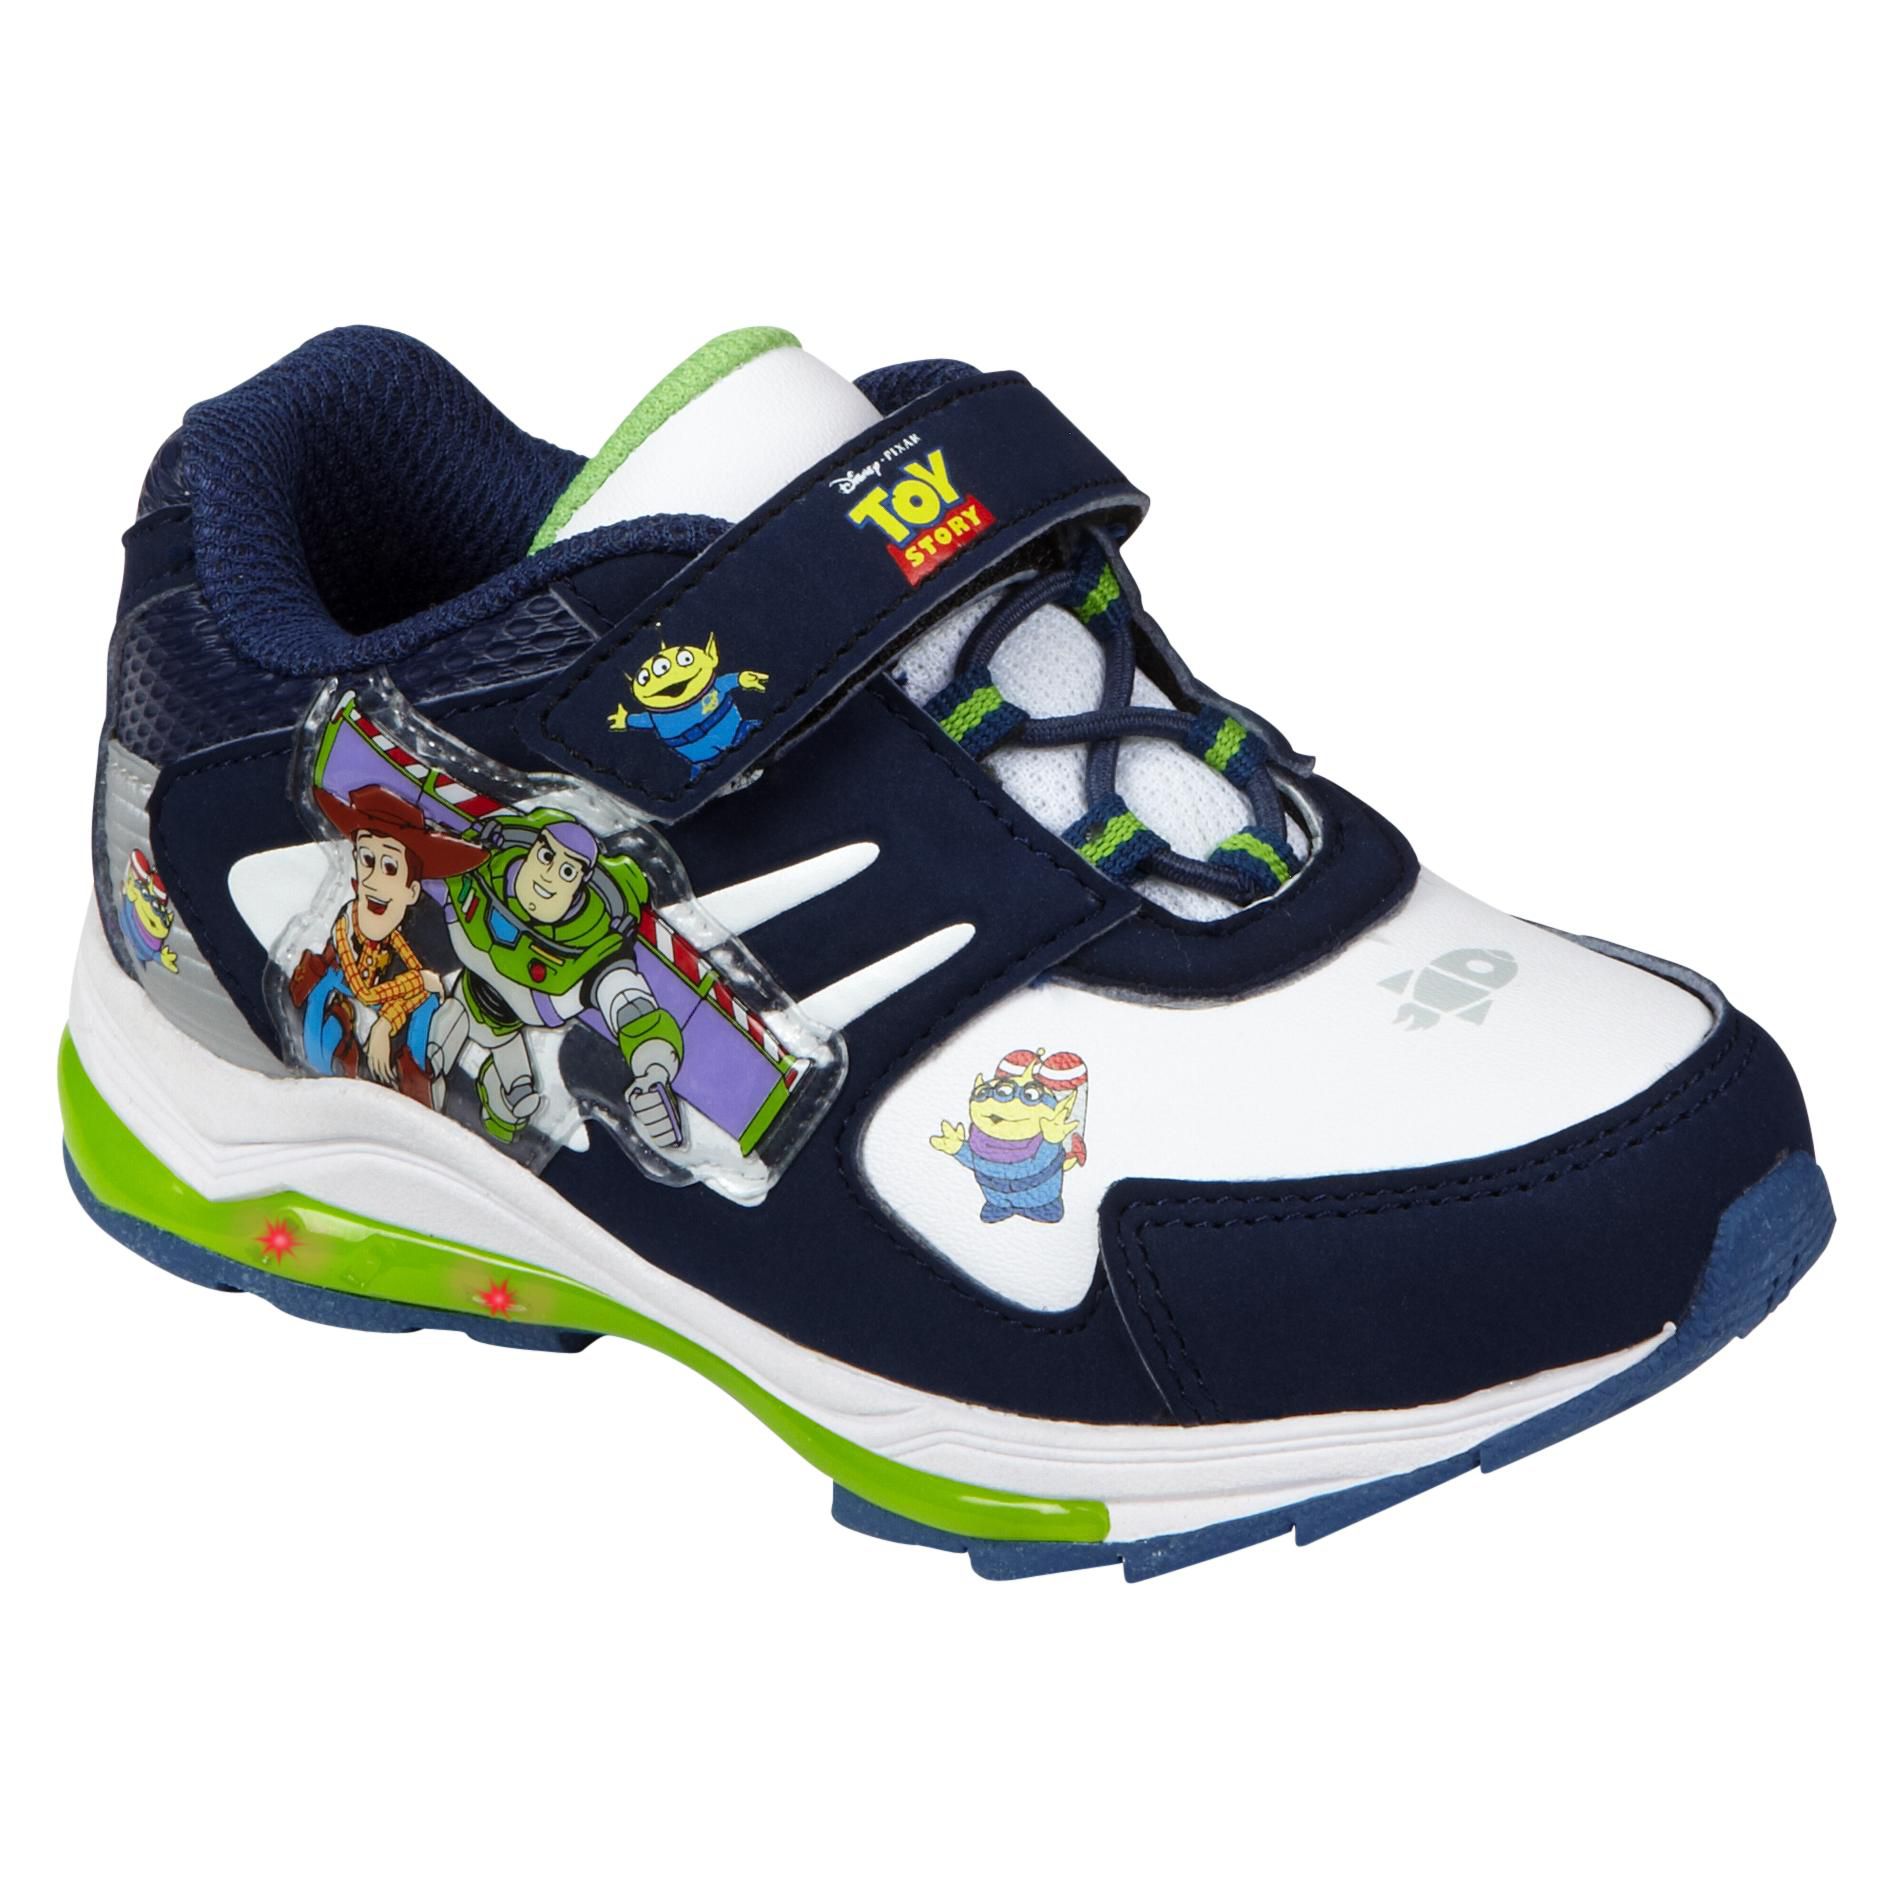 Disney Toddler Boy's Toy Story 3 Athletic Shoe Blue